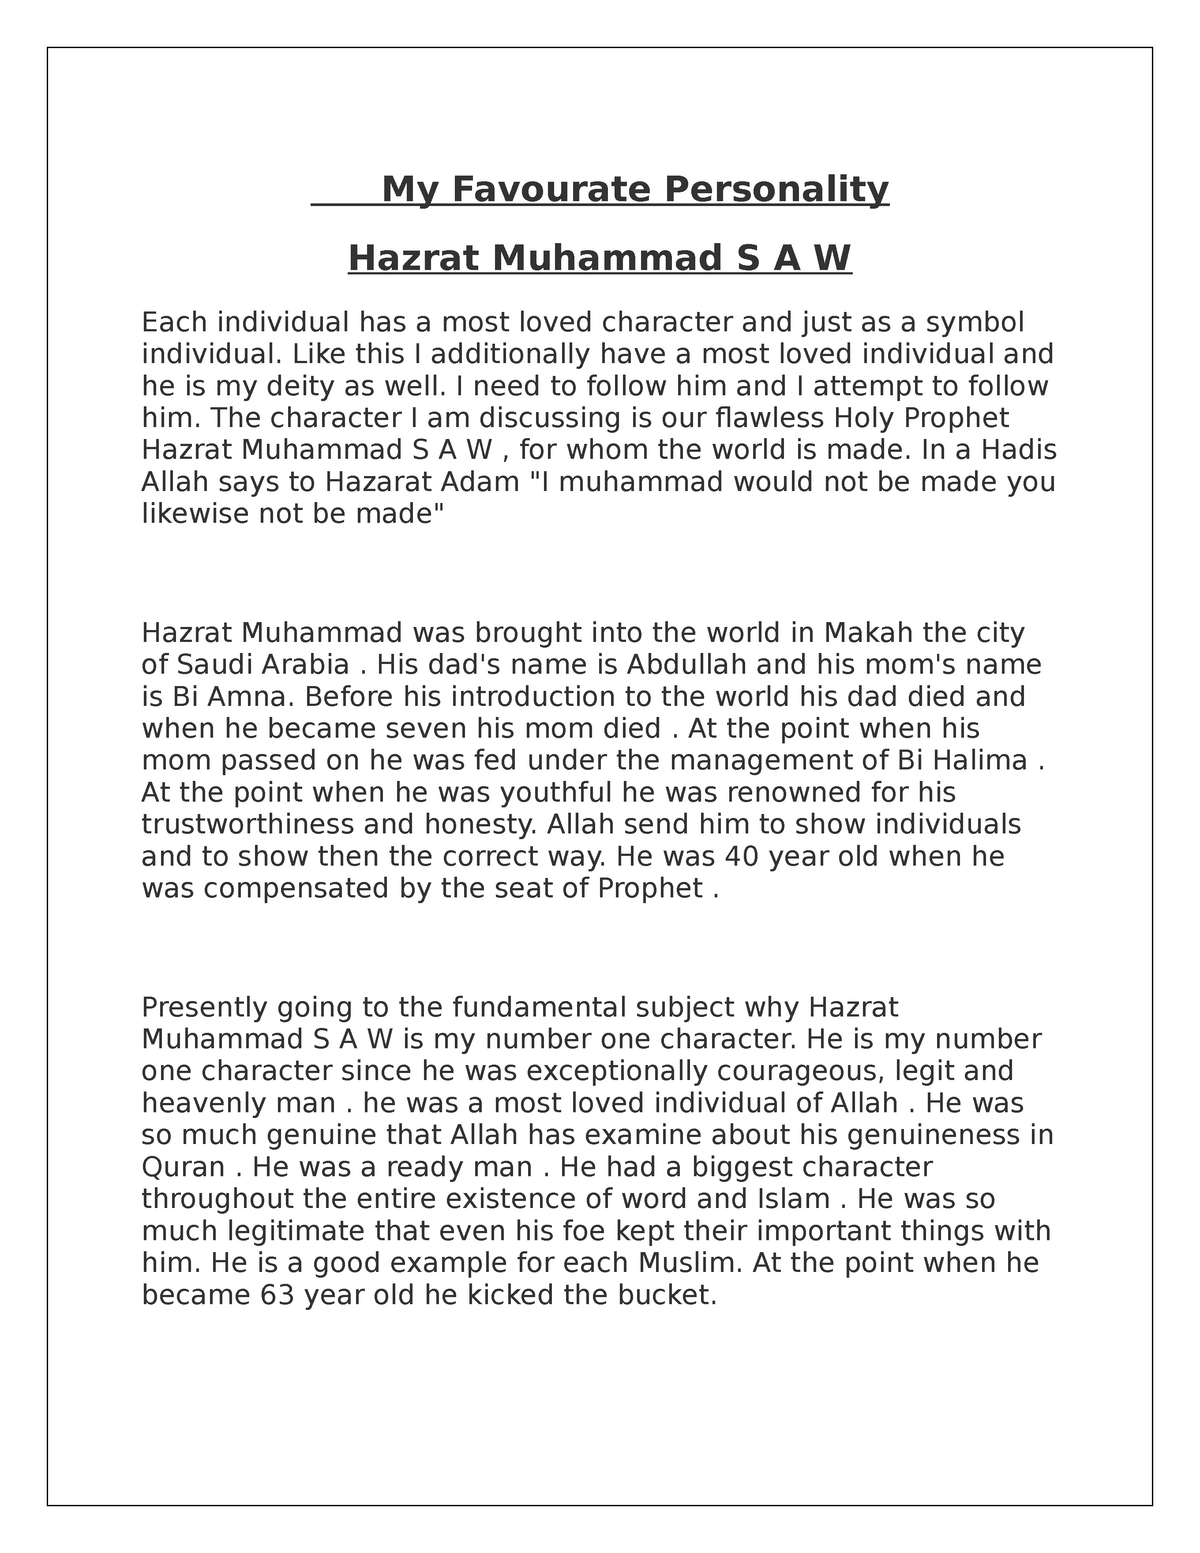 essay on my ideal personality hazrat muhammad